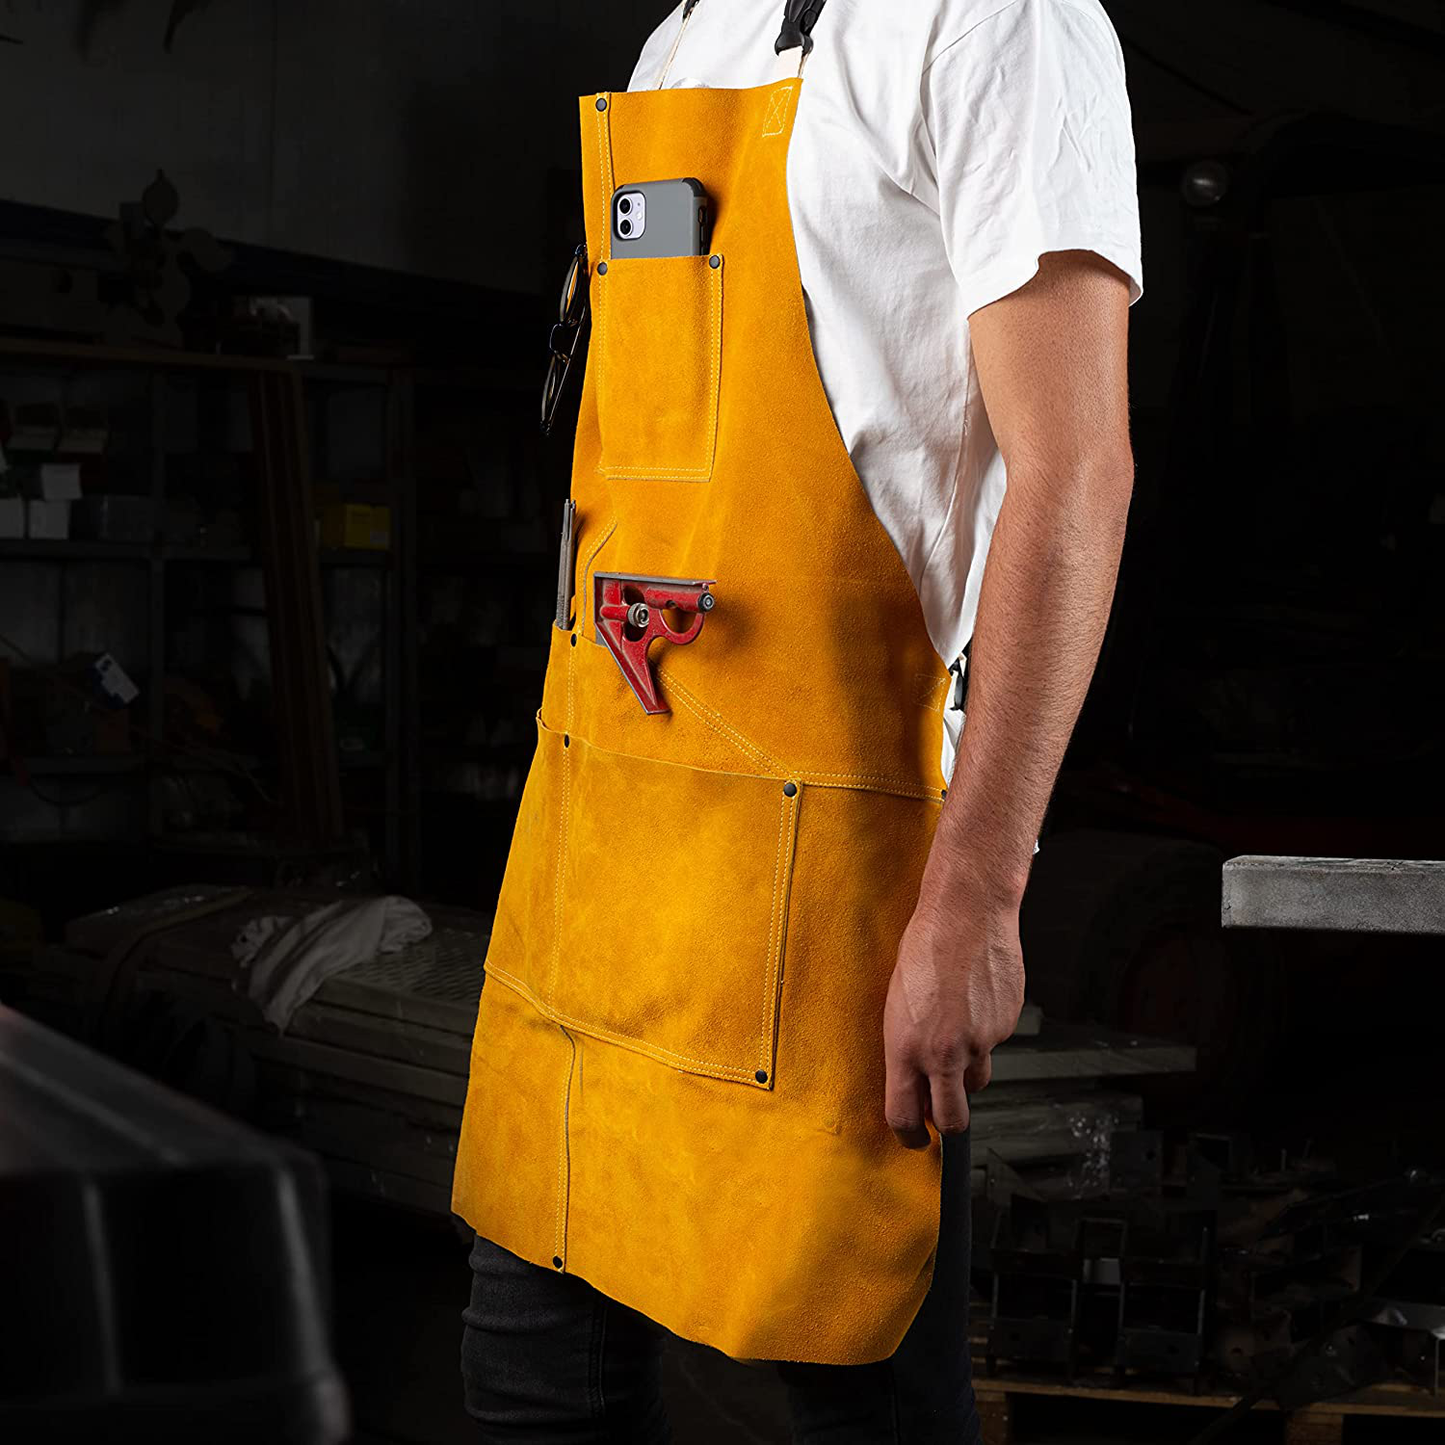 Heavy Duty Leather Welding Apron For Men -Cowhide blacksmith apron 6 Pockets - Fire Resistant Work Apron - Leather Apron For Welders - Blacksmith Apron